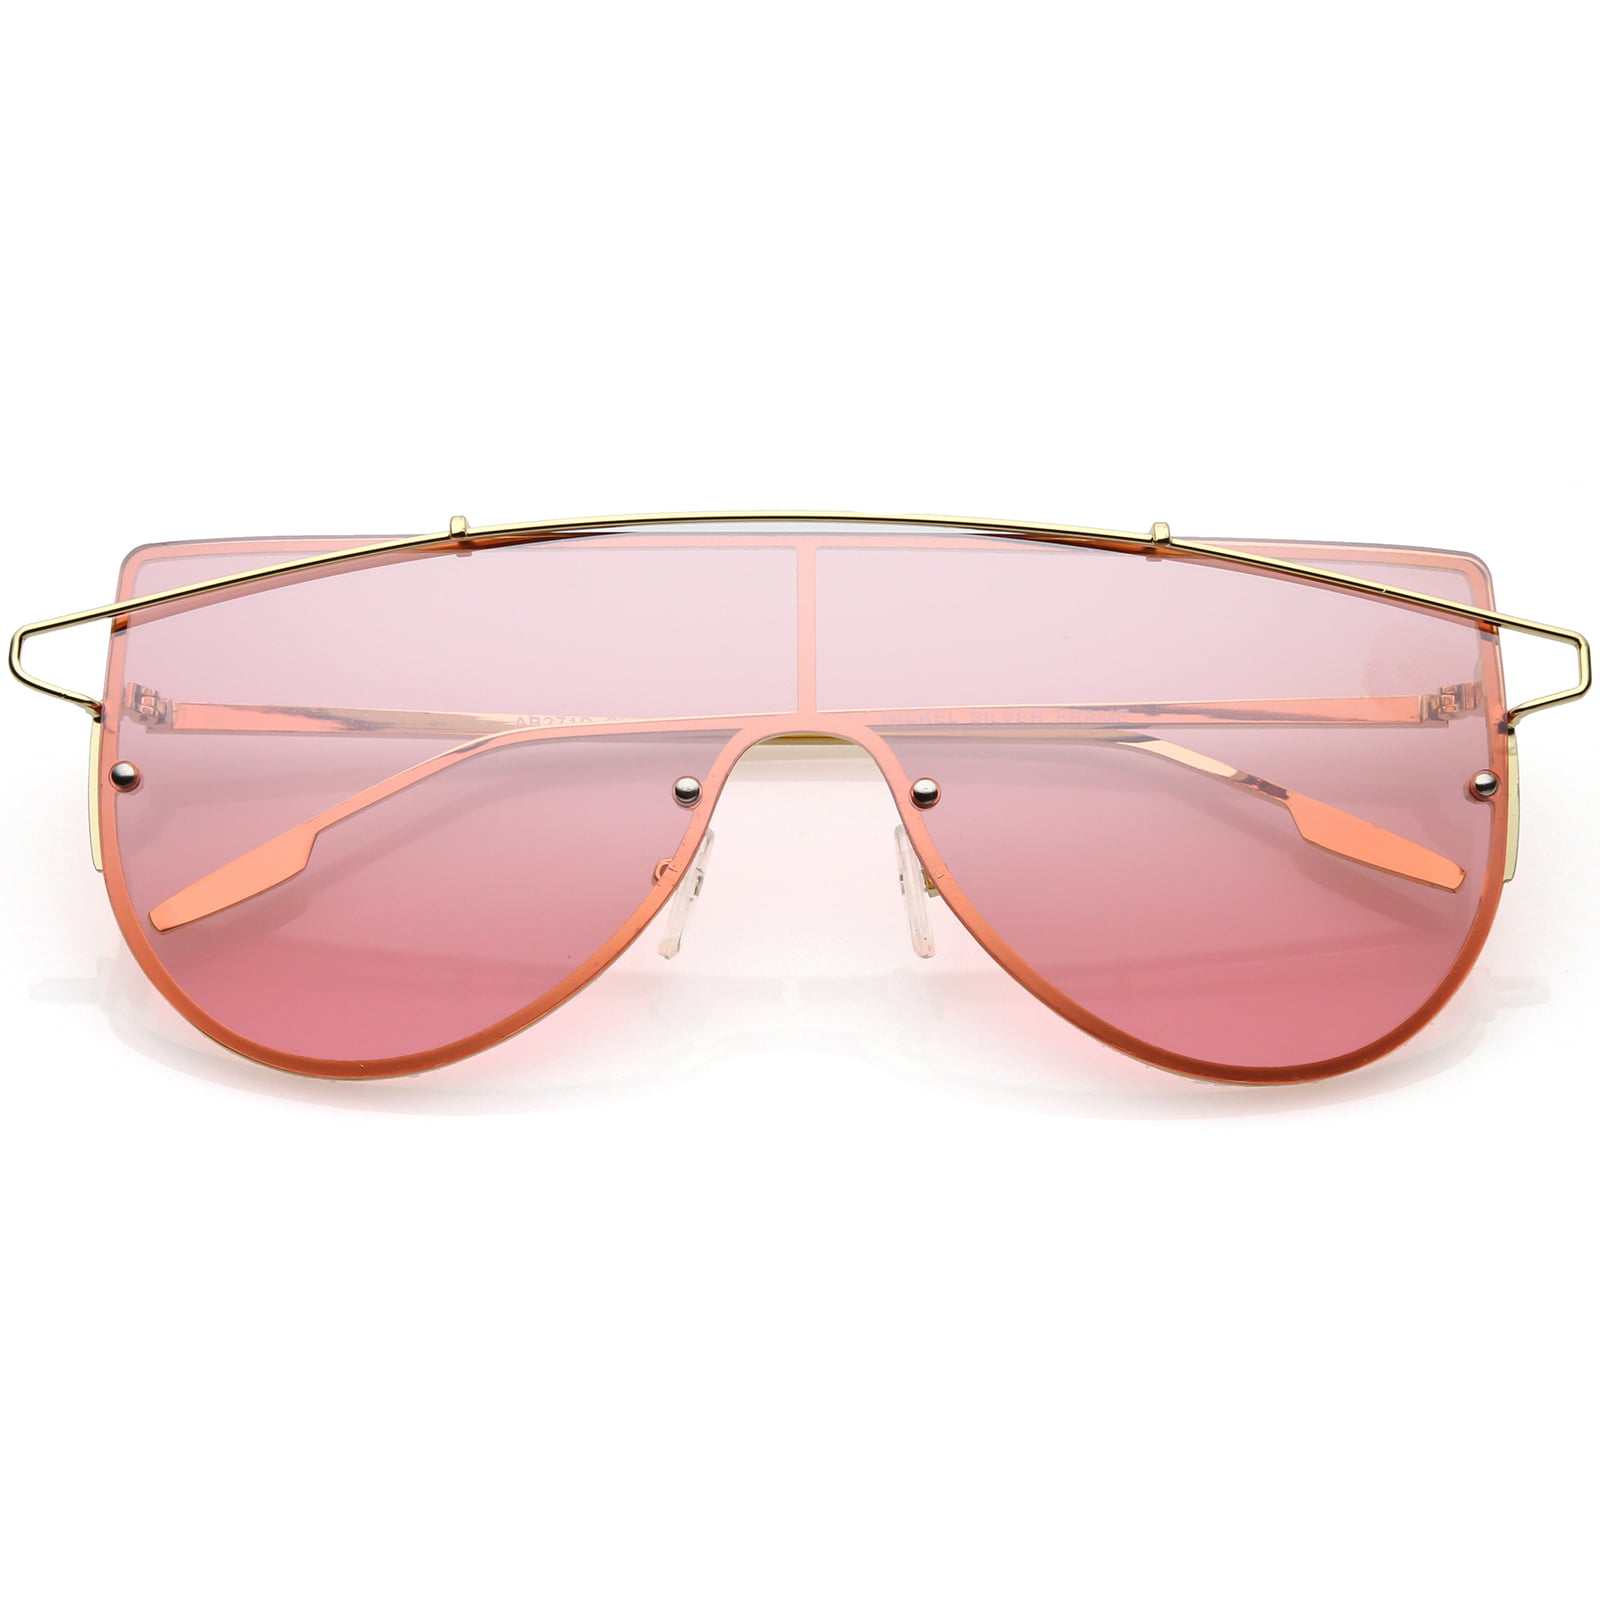 sunglass.la - Futuristic Rimless Shield Sunglasses Metal Crossbar ...